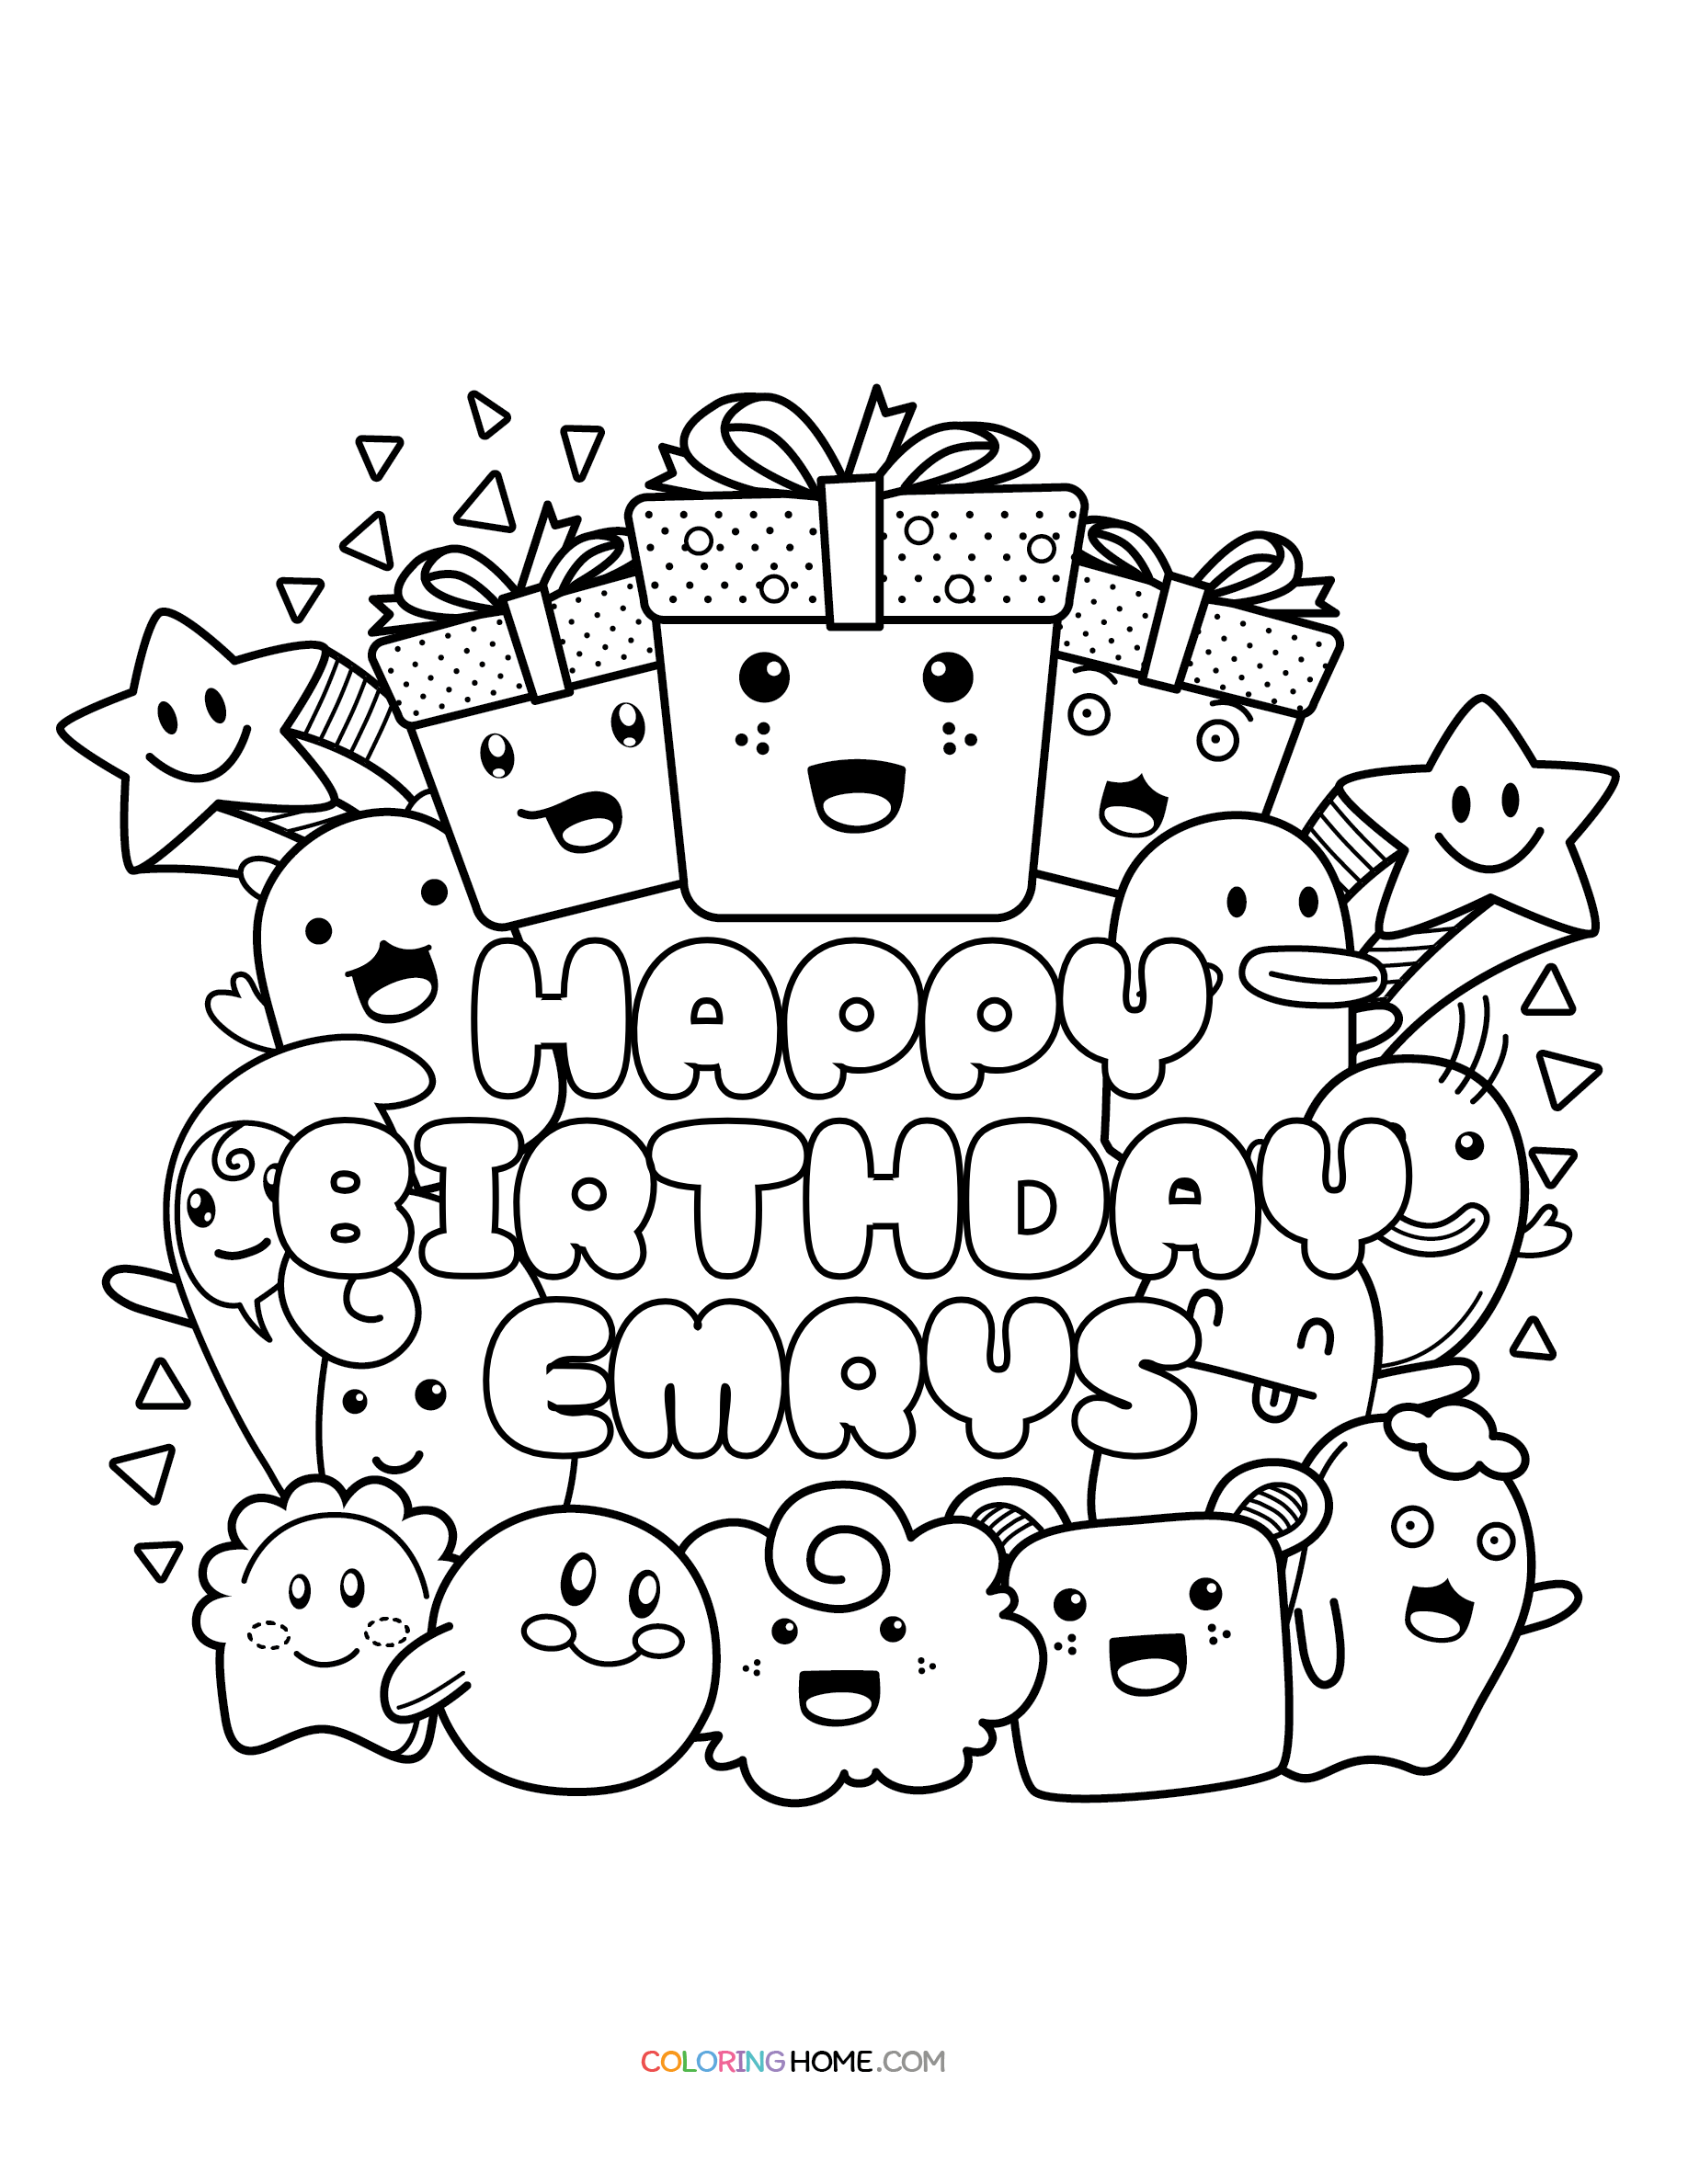 Happy Birthday Emrys coloring page